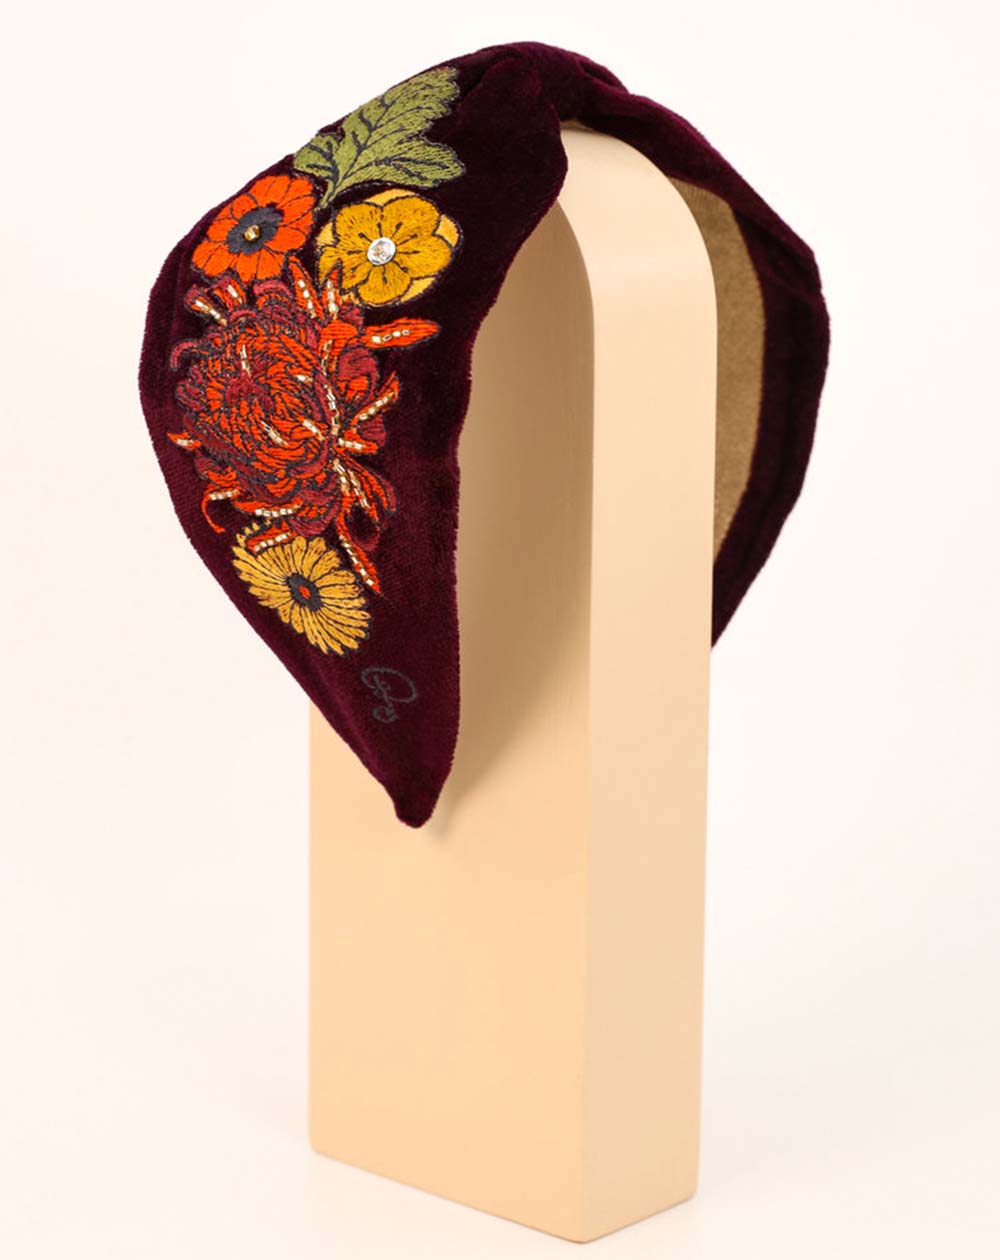 Powder Embroidered Vintage Floral Headband in Damson